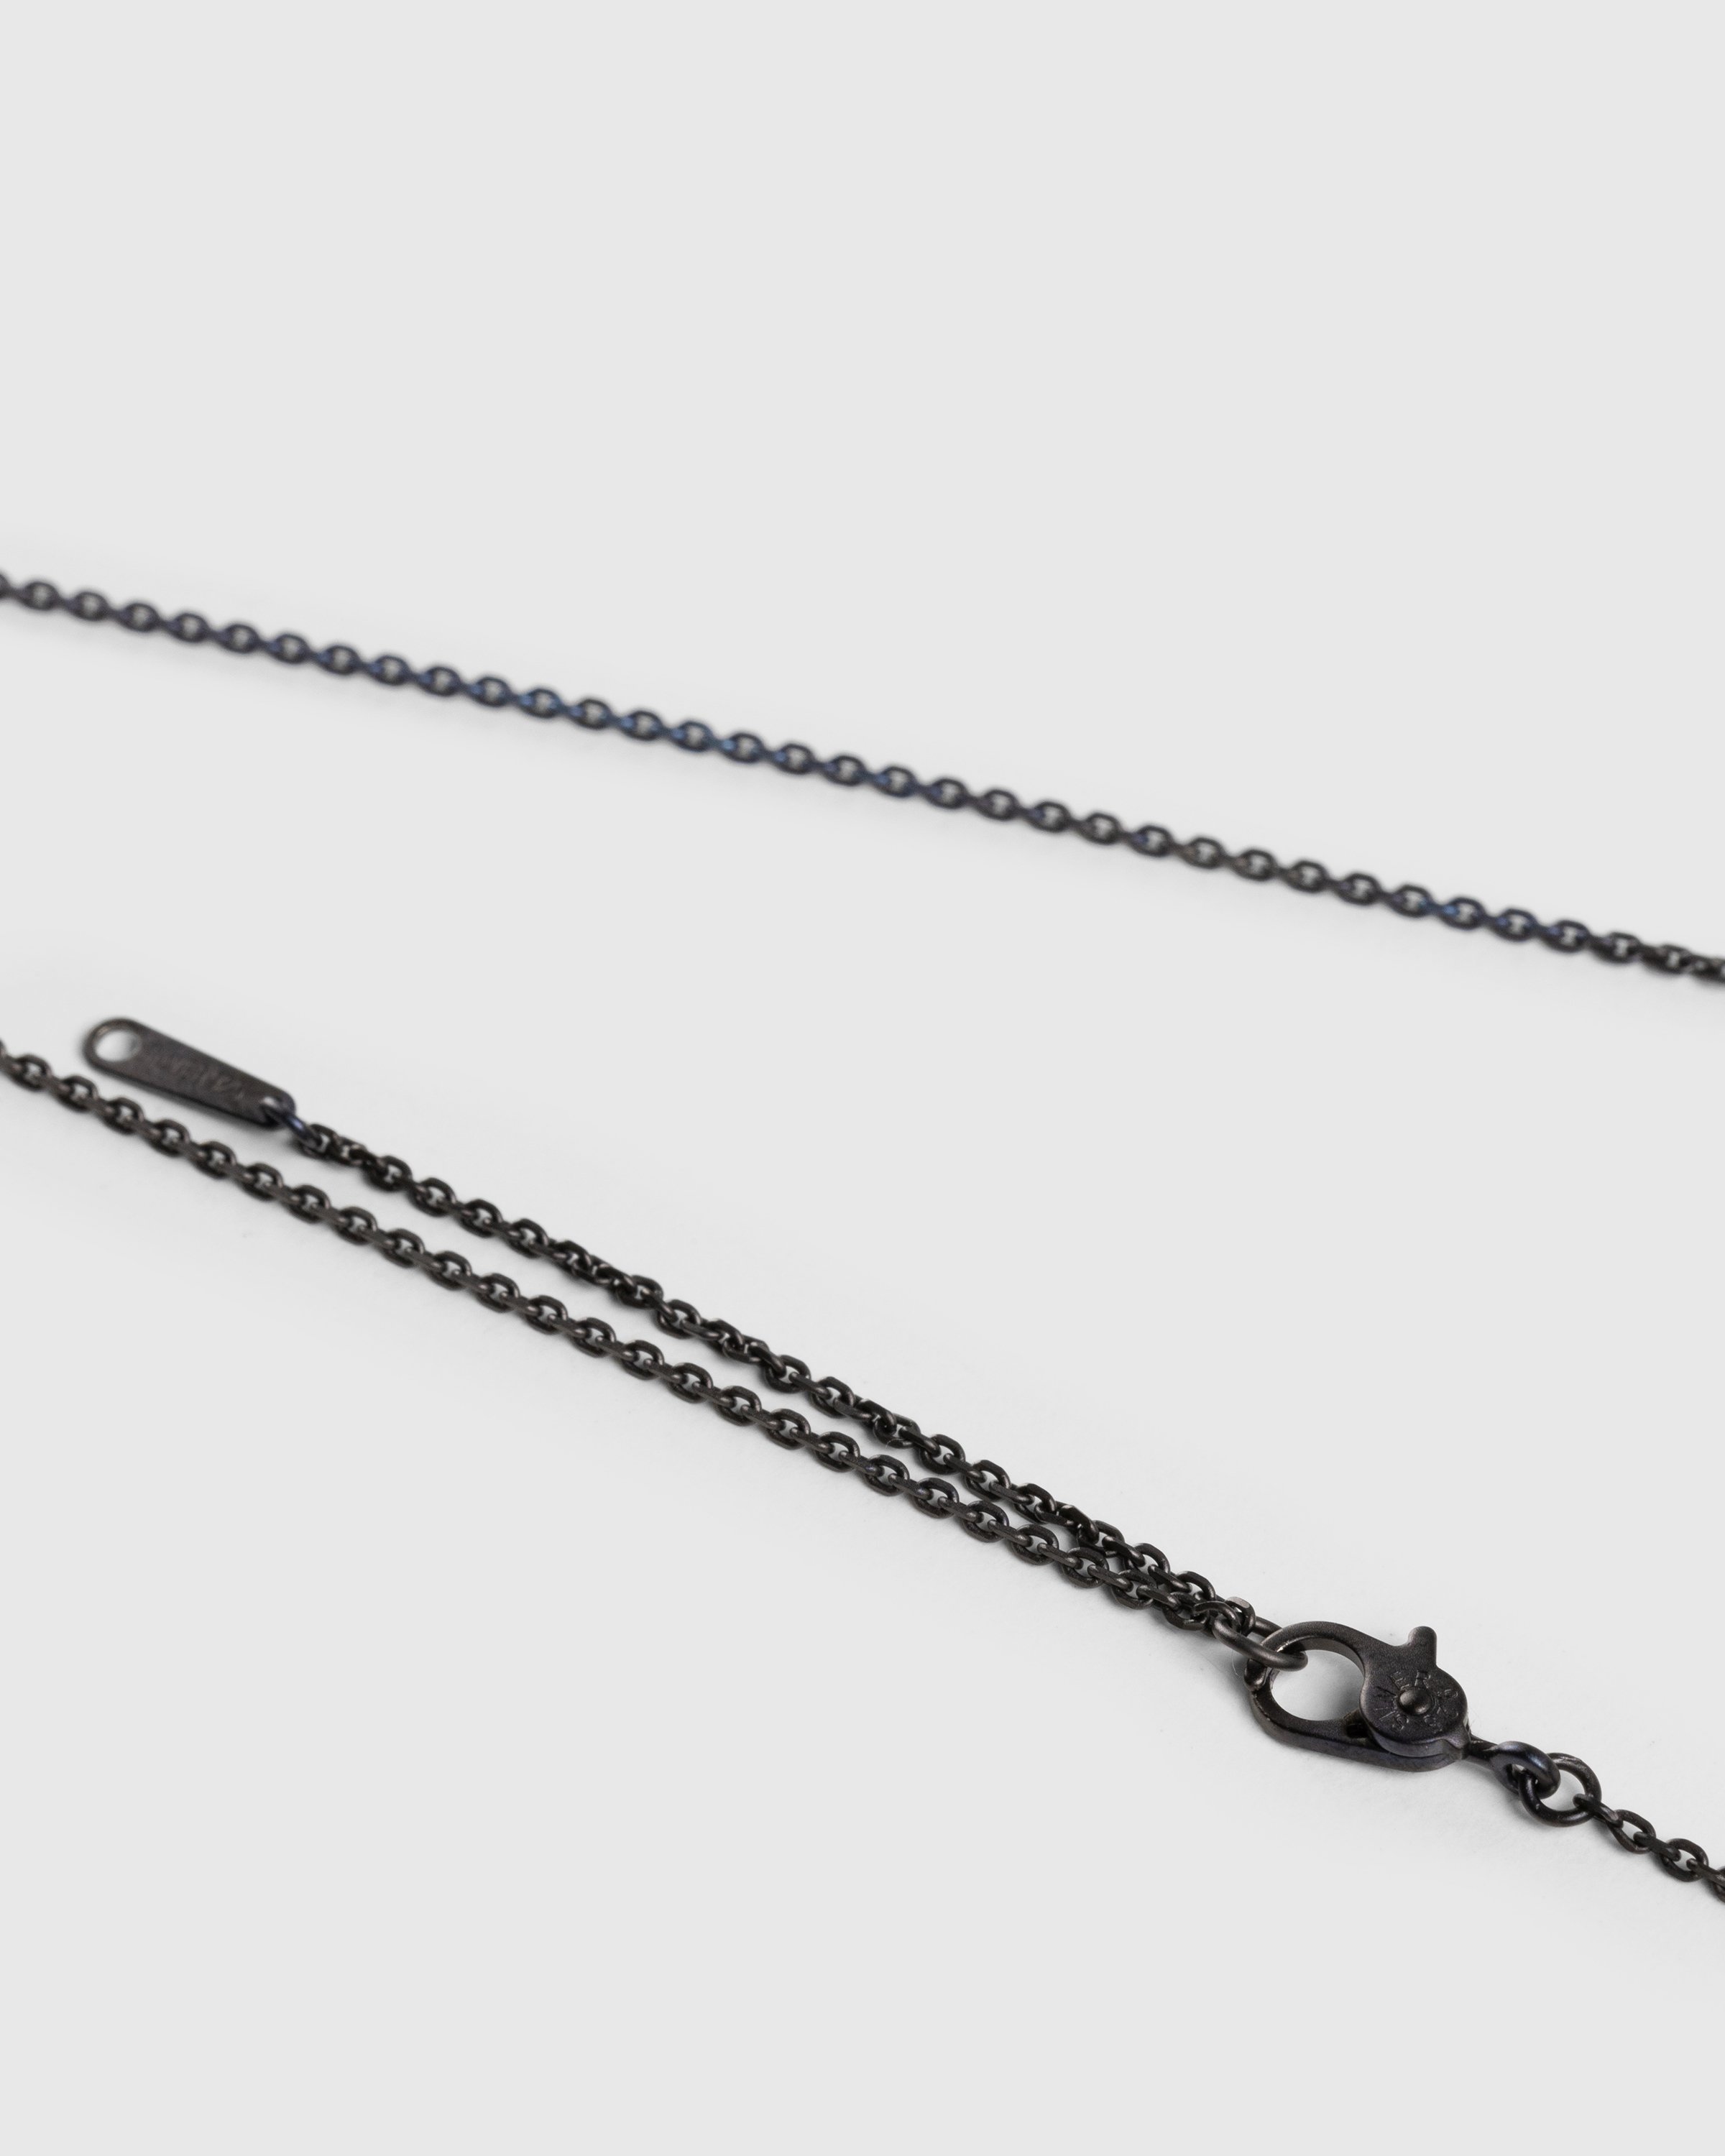 Medicom - Be@rbrick x IVXLCDM Charm Necklace Black - Accessories - Black - Image 2